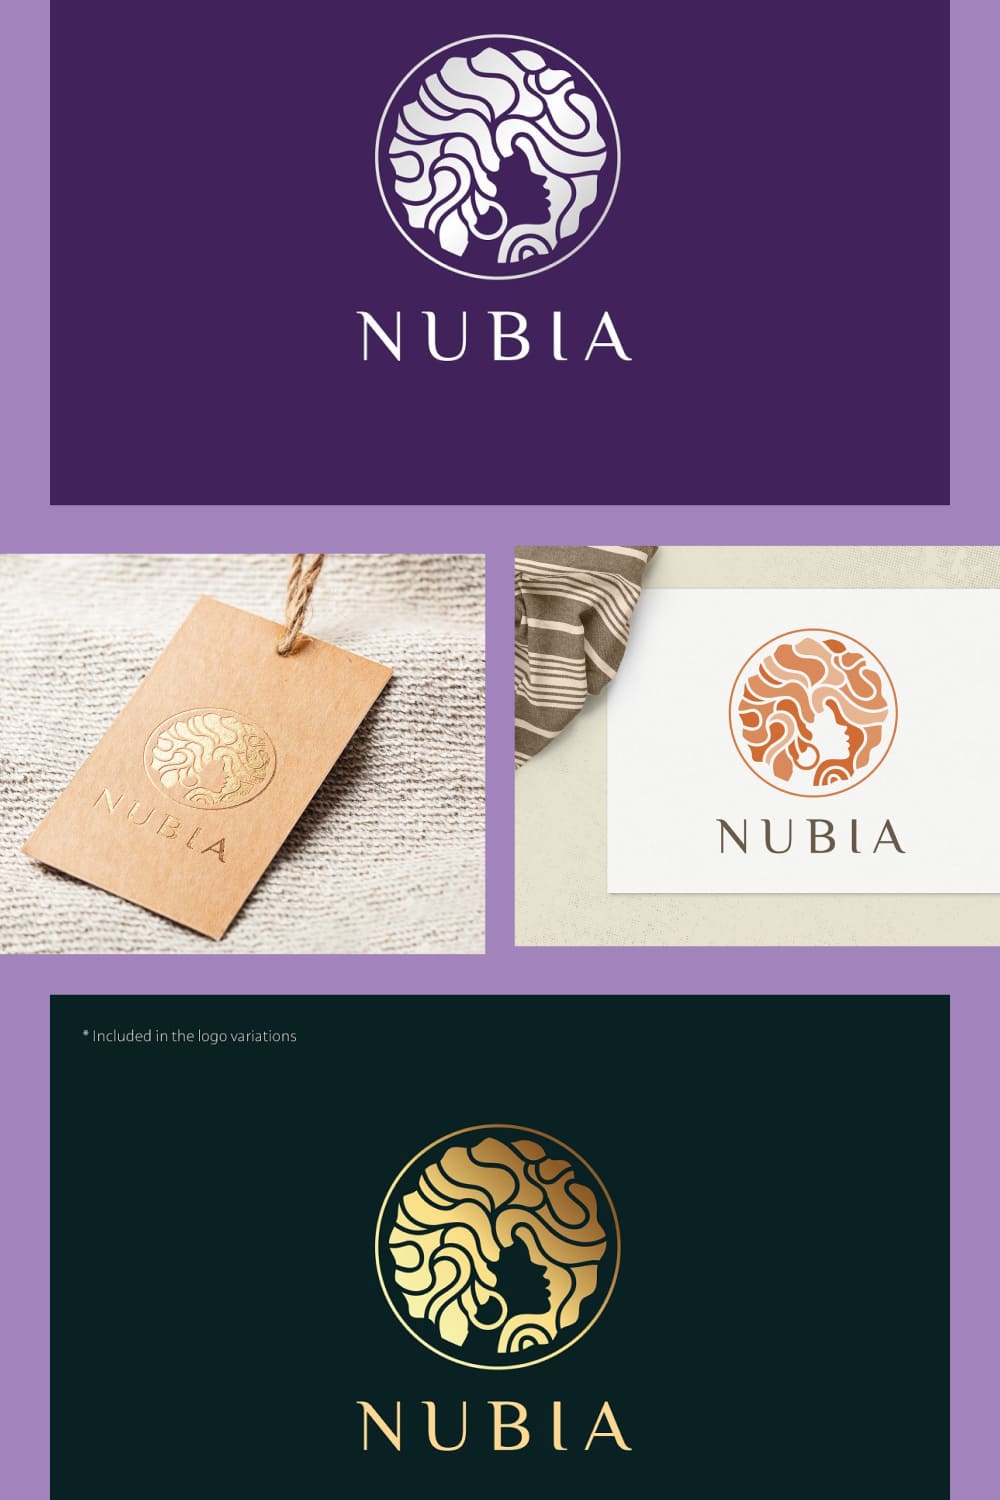 Nubia princess hair style logo concept.